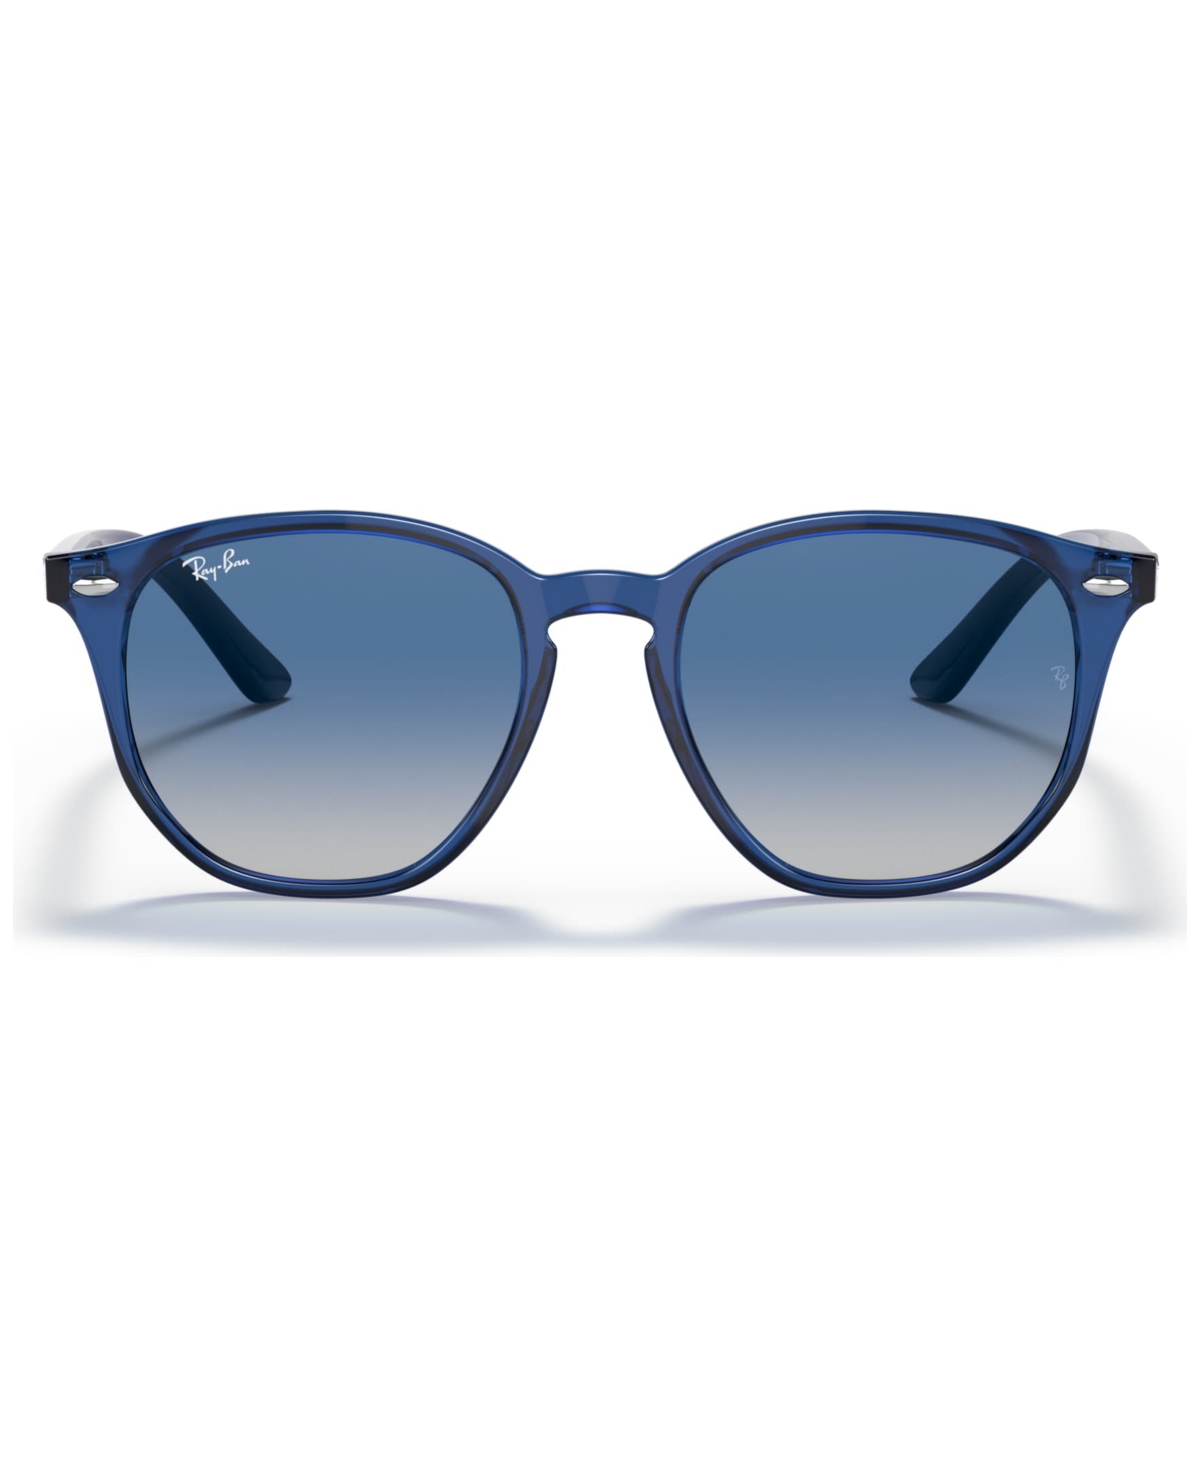 Ray-ban Jr Kids' . Blu Lit Sunglasses, Rj9070 (ages 7-10) In Transparent Blue,grey Gradient Dark Blue